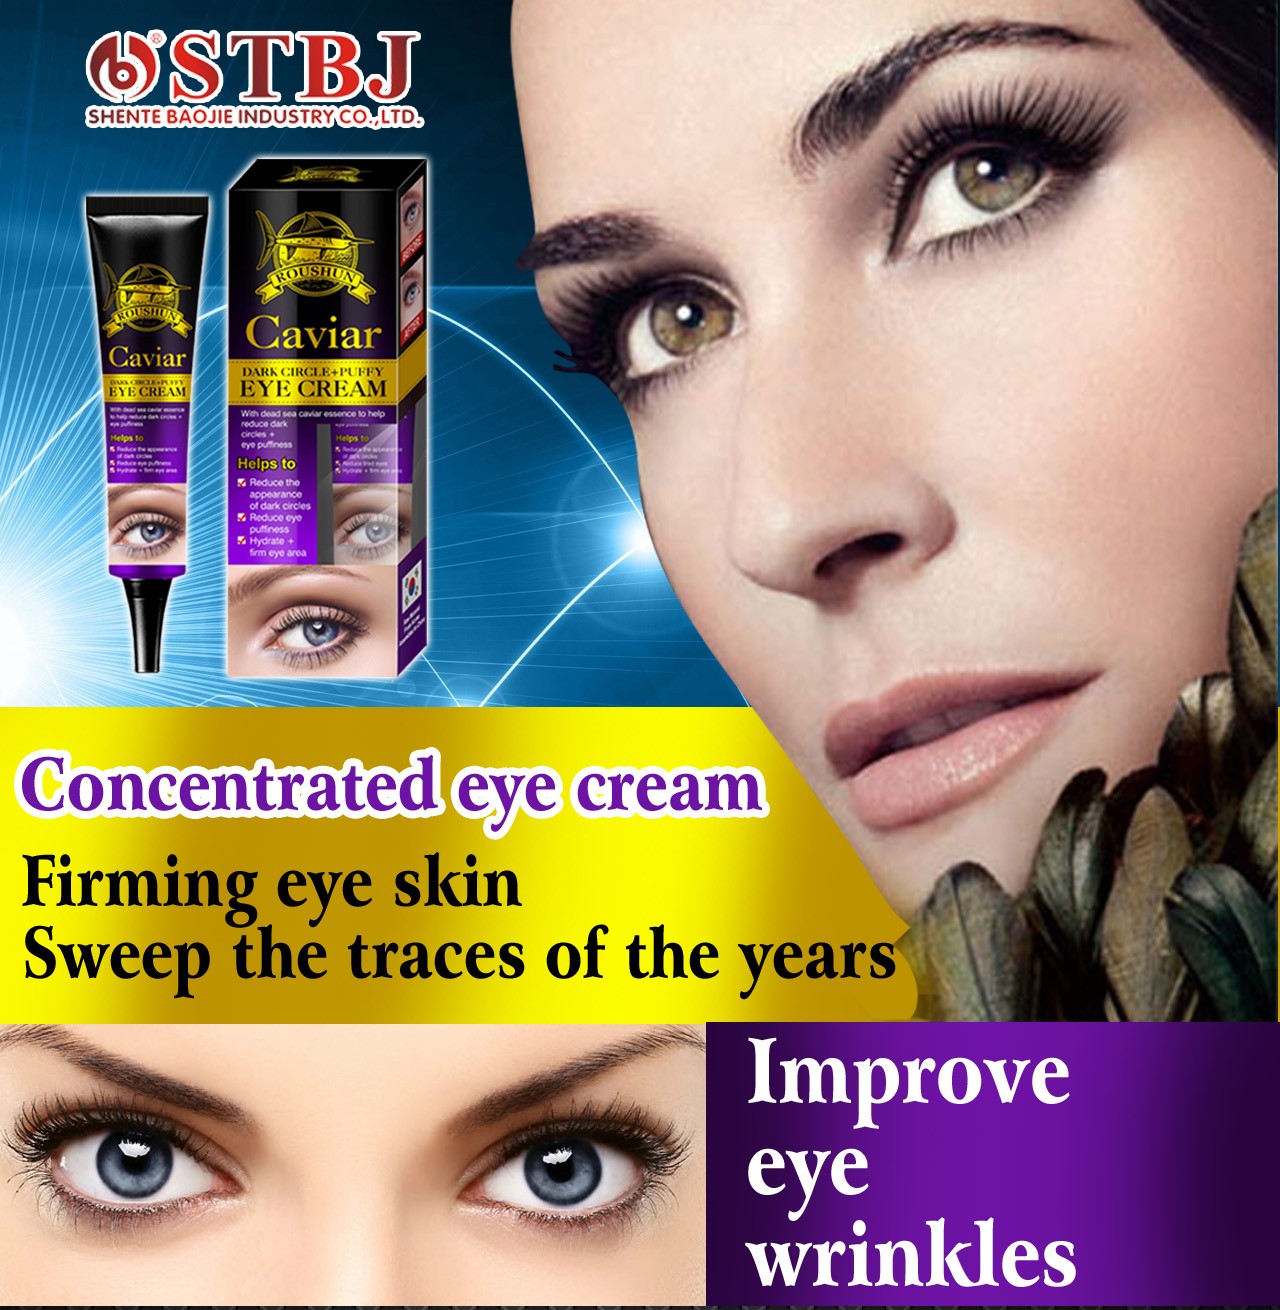 Caviar eye cream